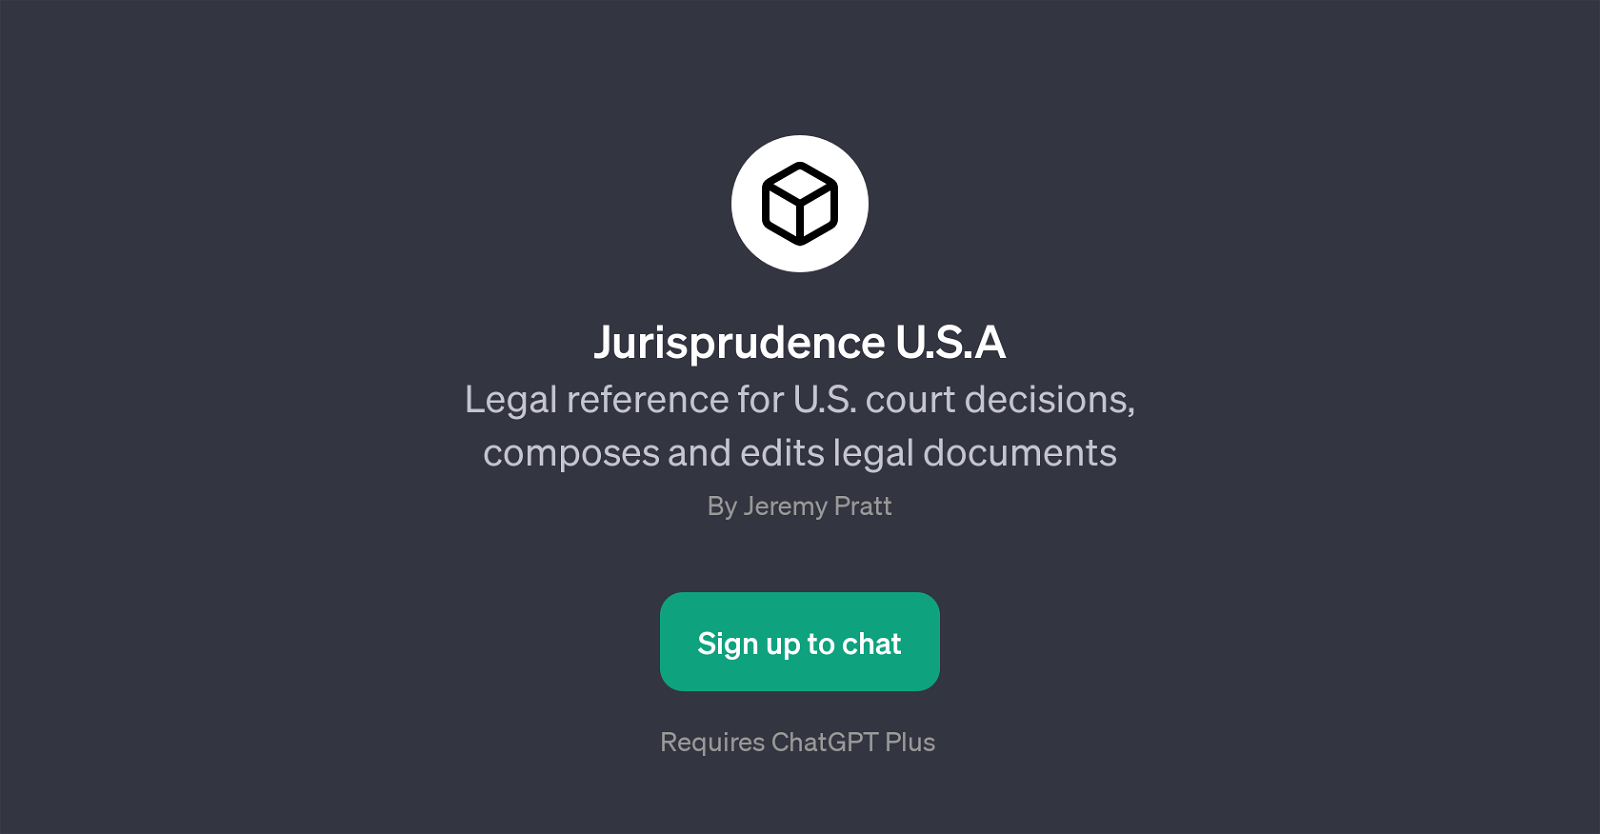 Jurisprudence U.S.A website